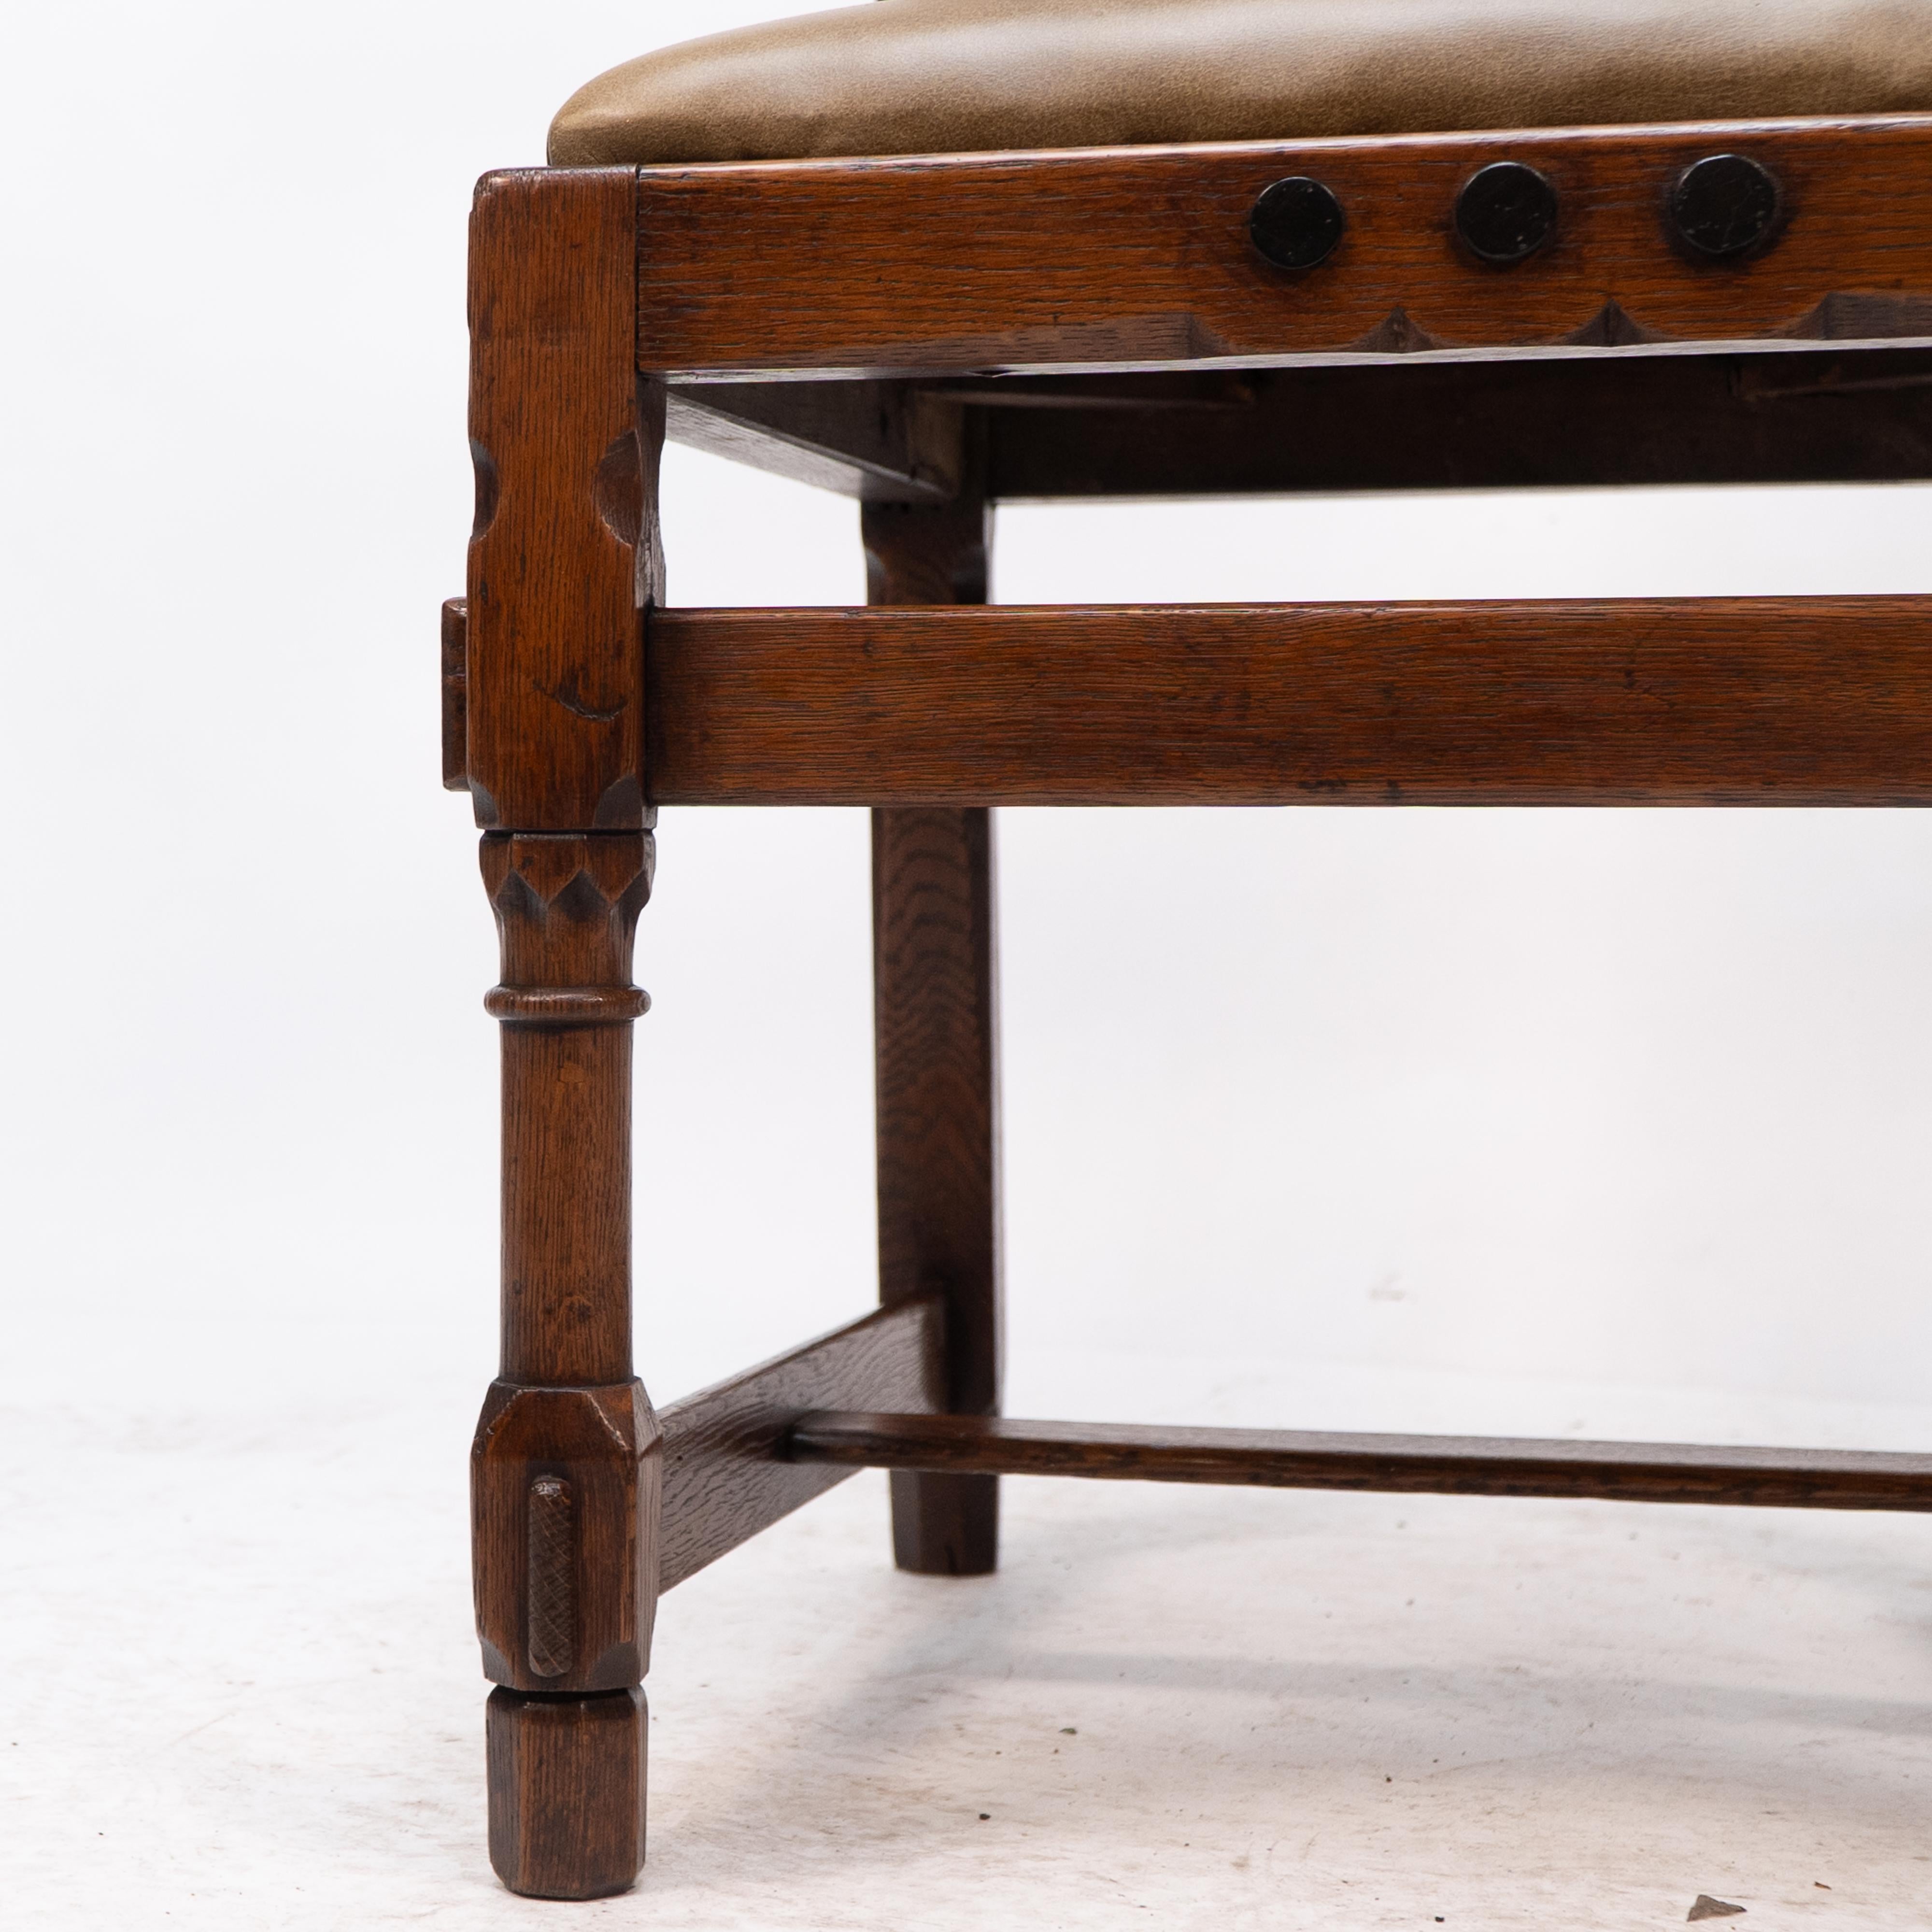 J P Seddon attri. An Aesthetic Movement oak side chair with ebonized circles For Sale 5